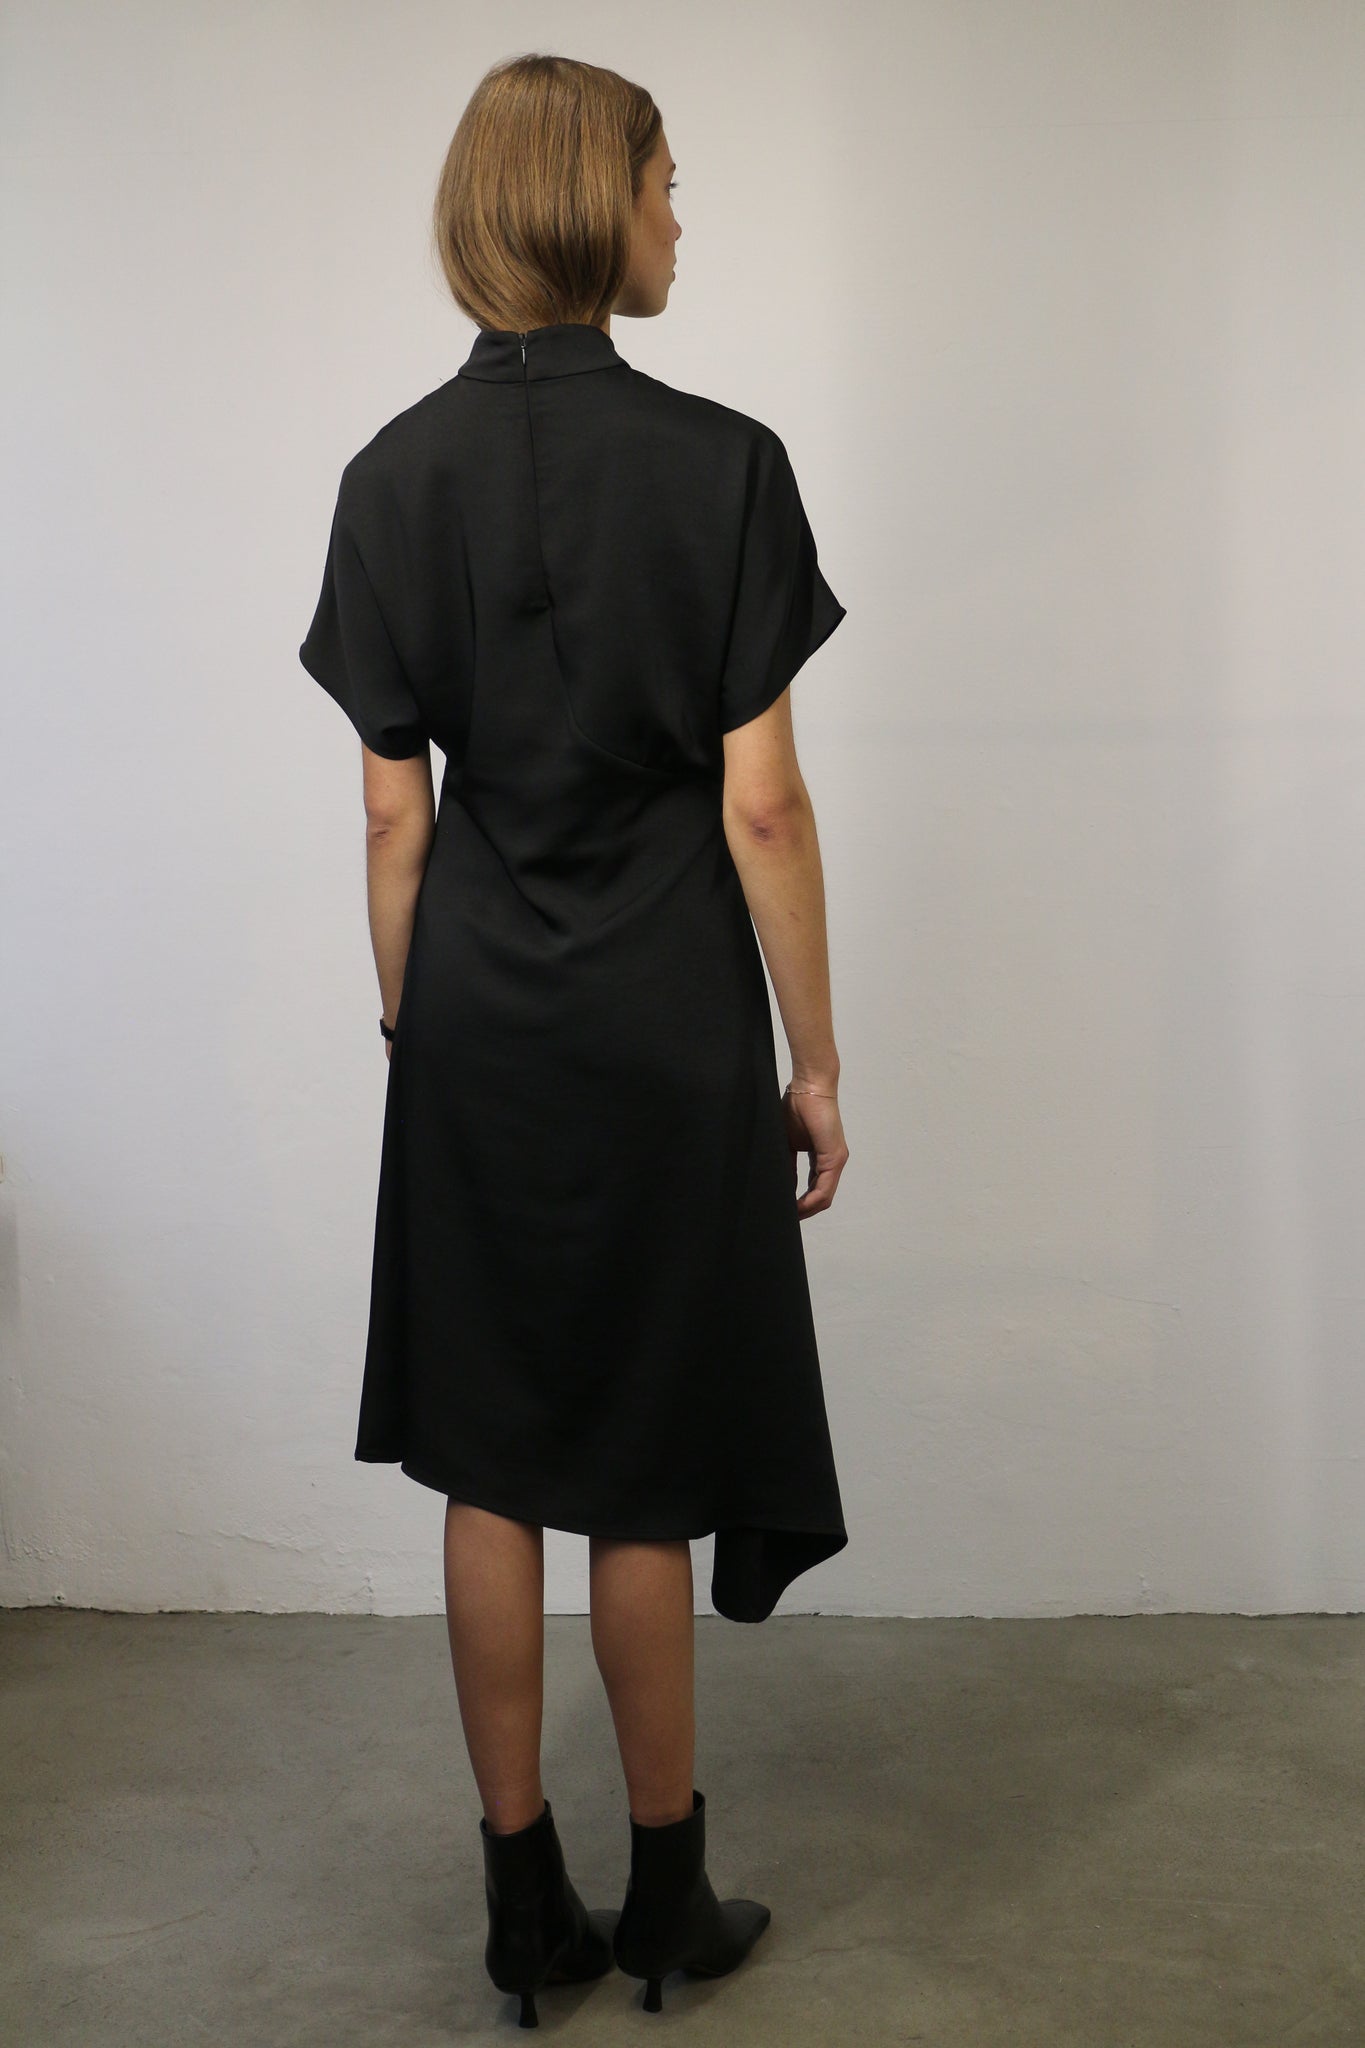 ASYMMETRICAL SATIN DRESS IN BLACK BY NORR